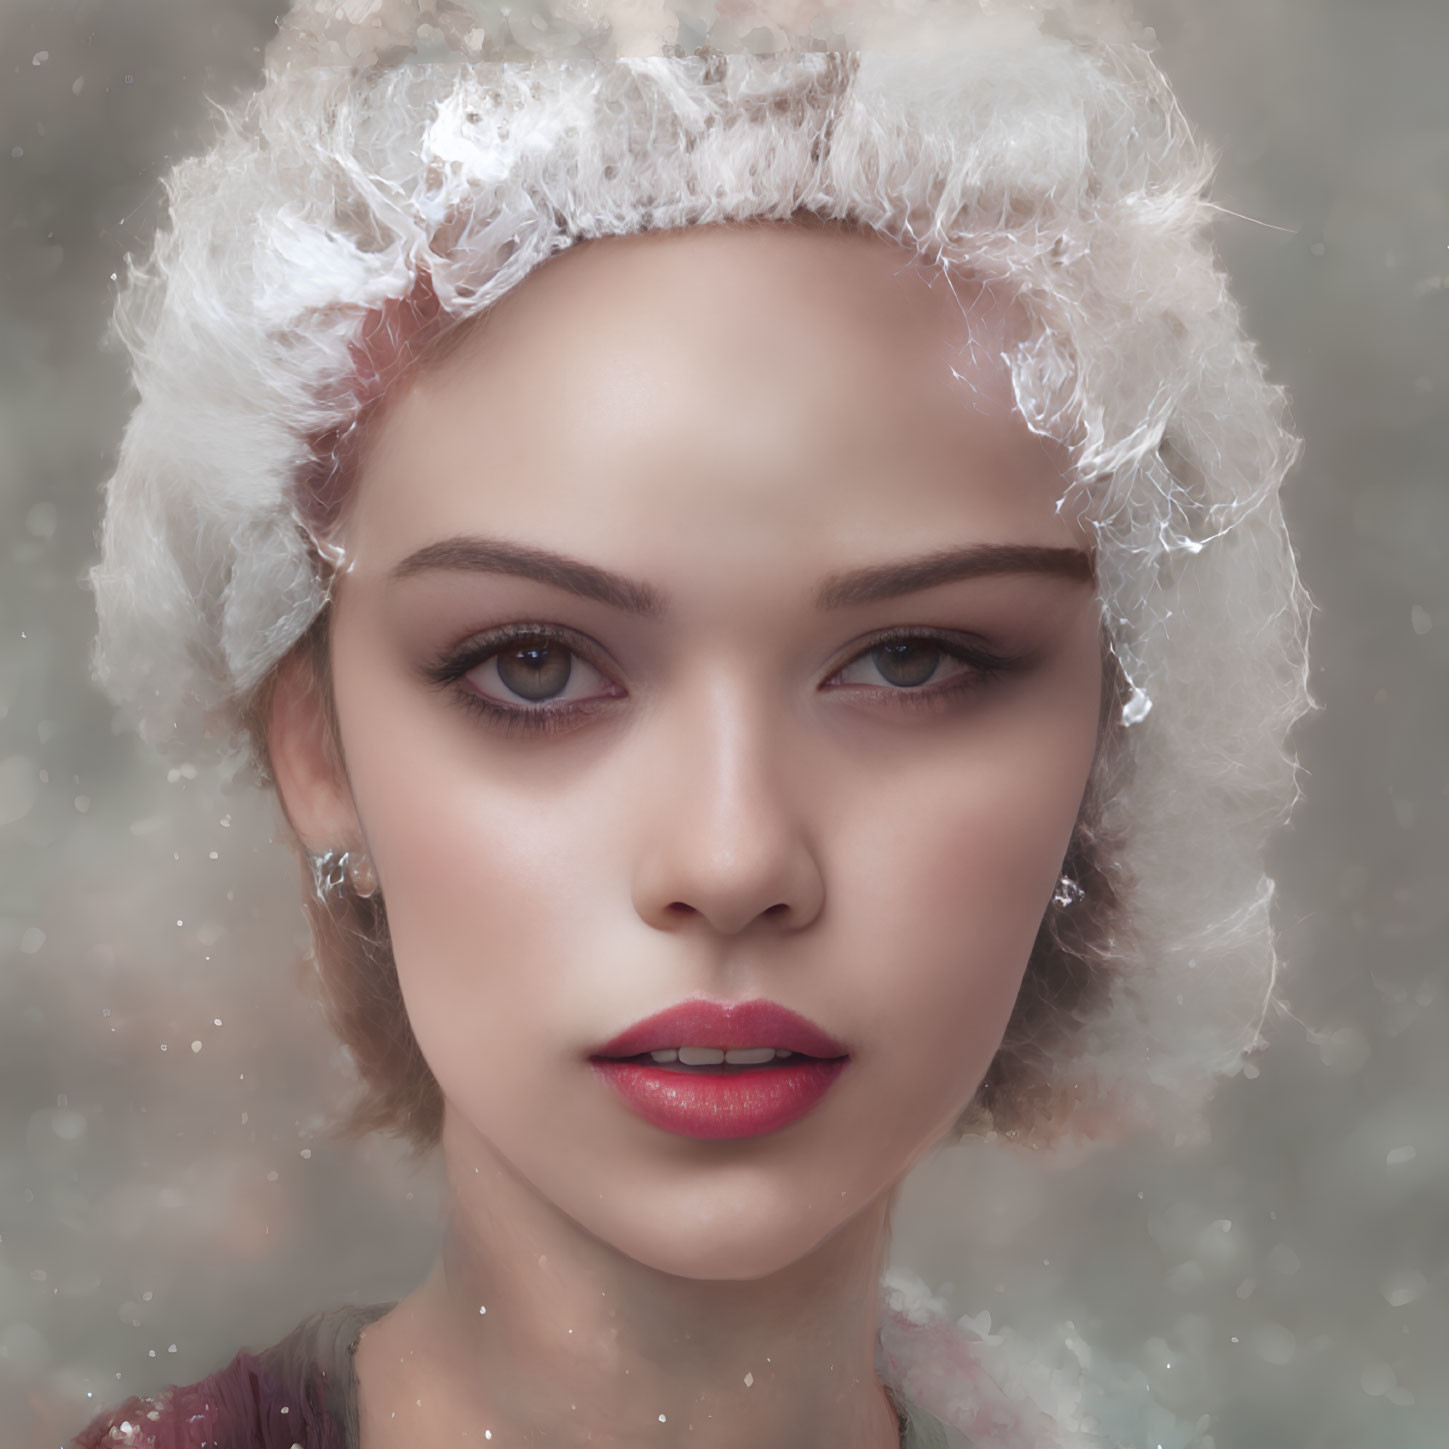 Woman Portrait: Striking Eyes, Red Lips, Snowy Hair, Sparkling Earrings